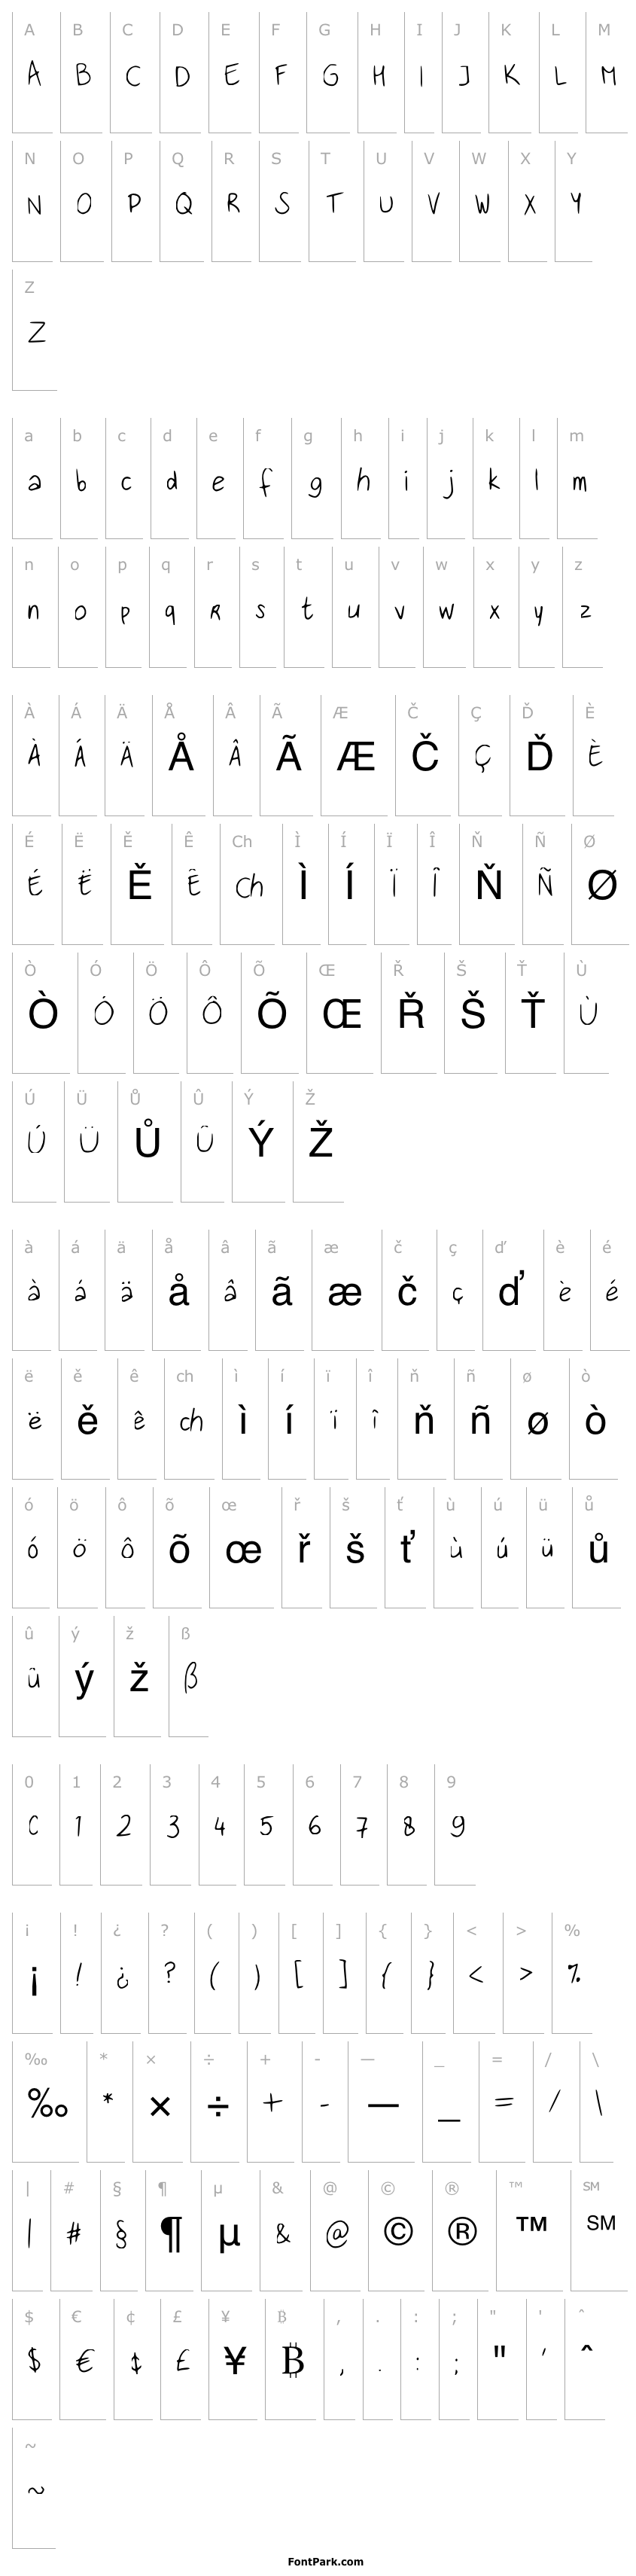 Overview Handwritingfont